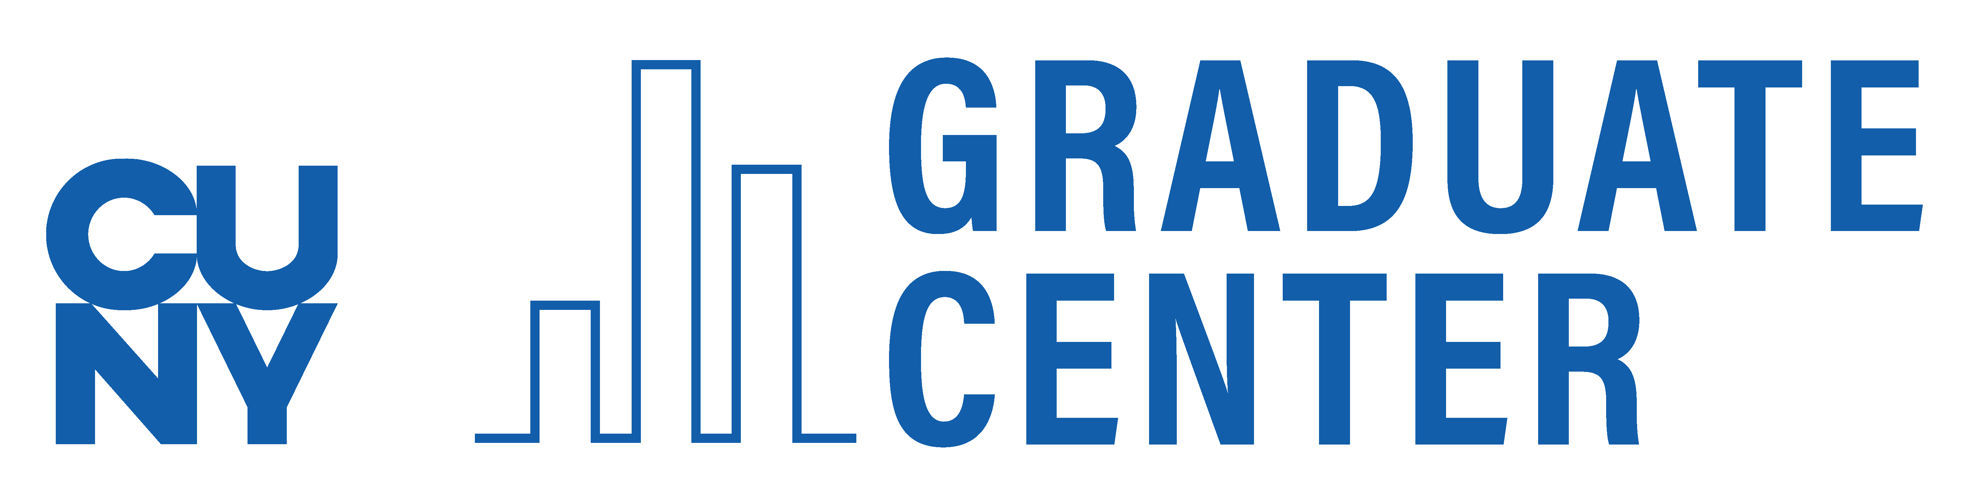 The Graduate Center - Events Store